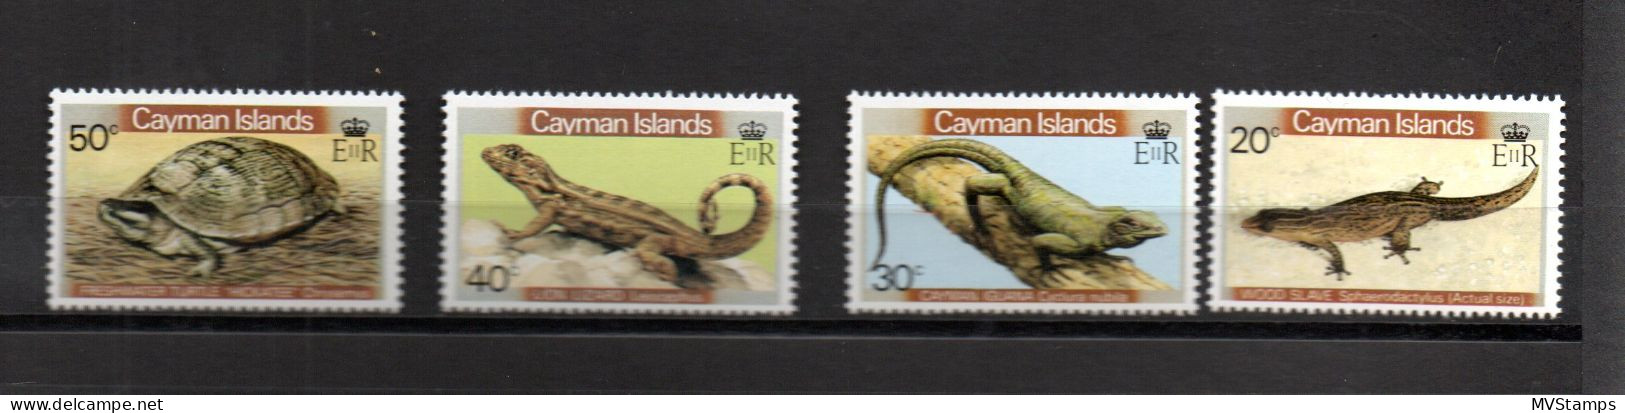 Cayman Islands 1981 Old Set Turtle/lizard Stamps (Michel 471/74) Nice MNH - Kaimaninseln